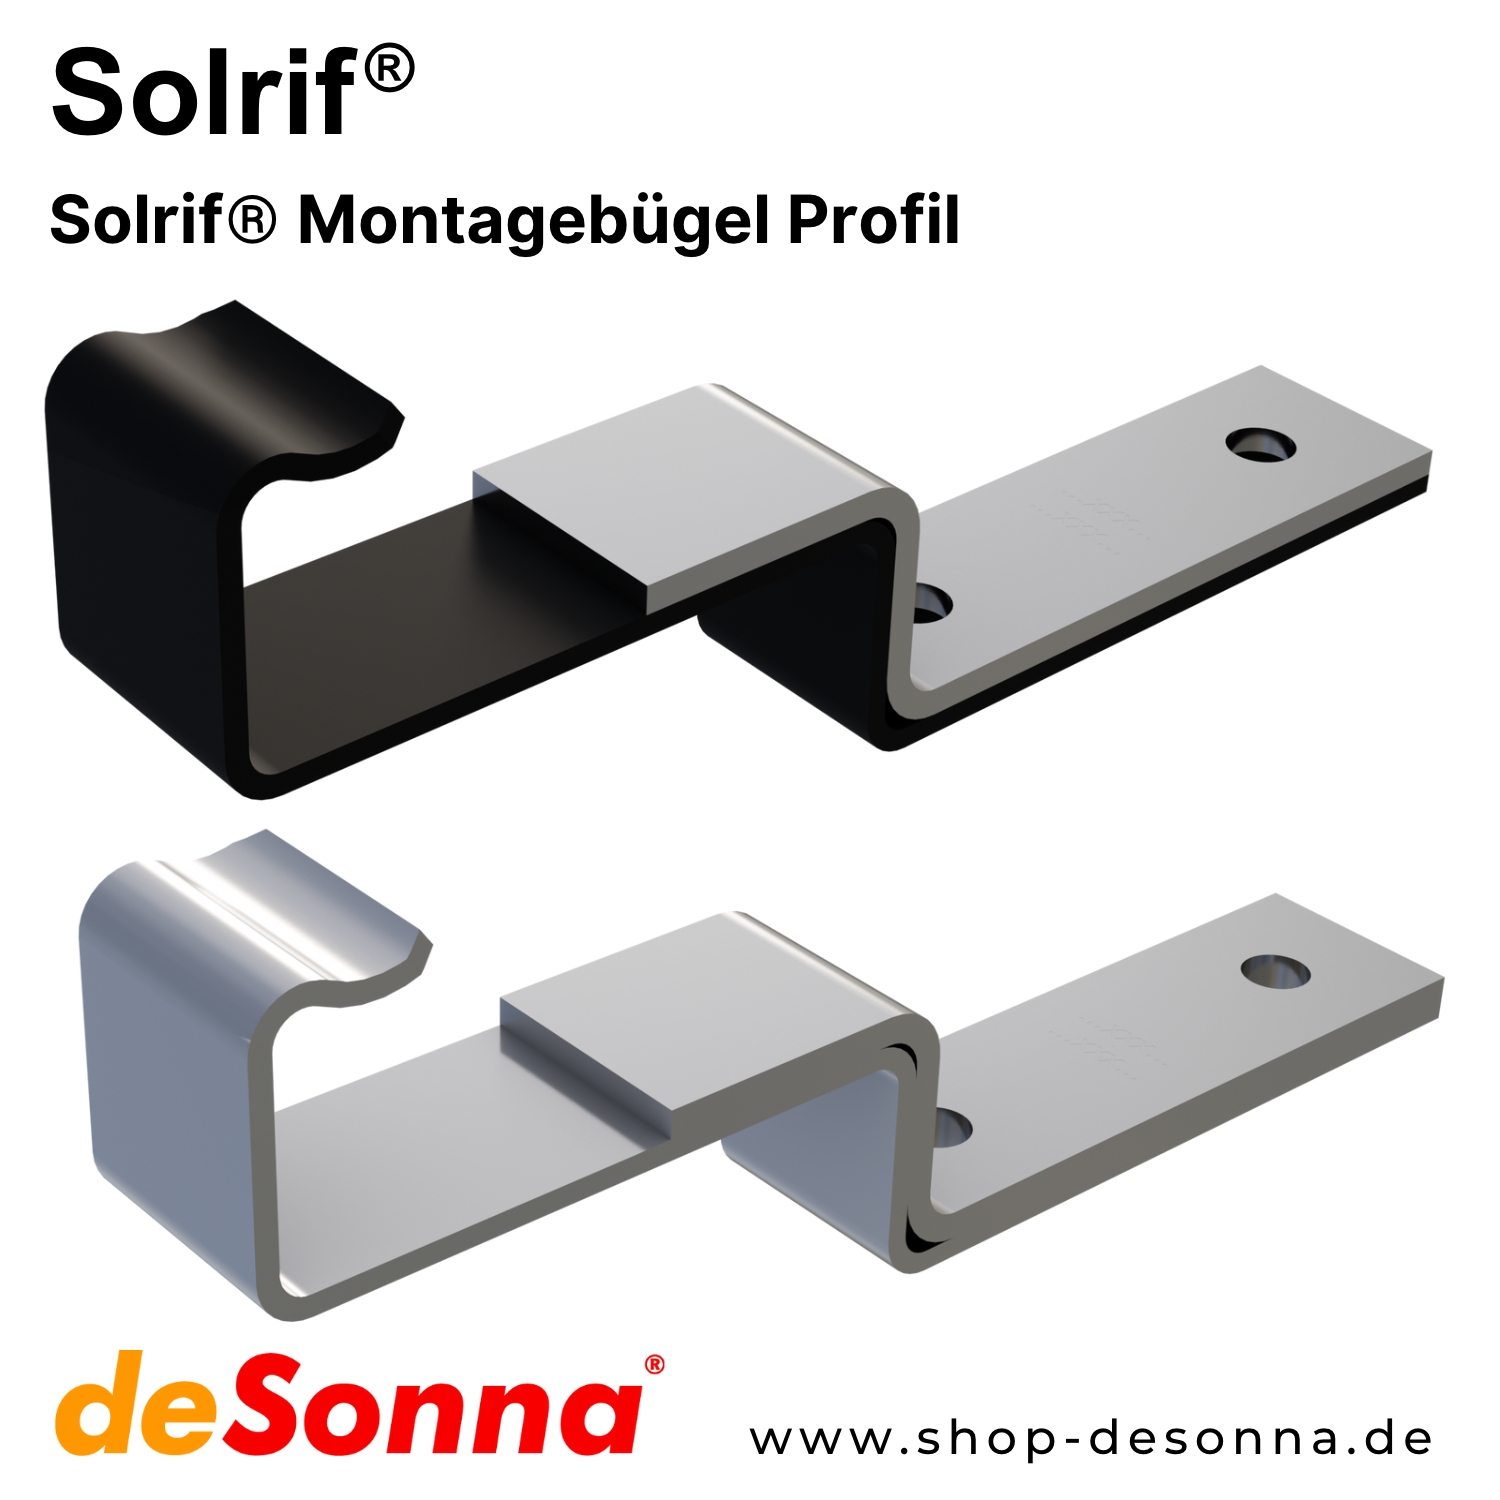 Solrif® Montagebügel Profil